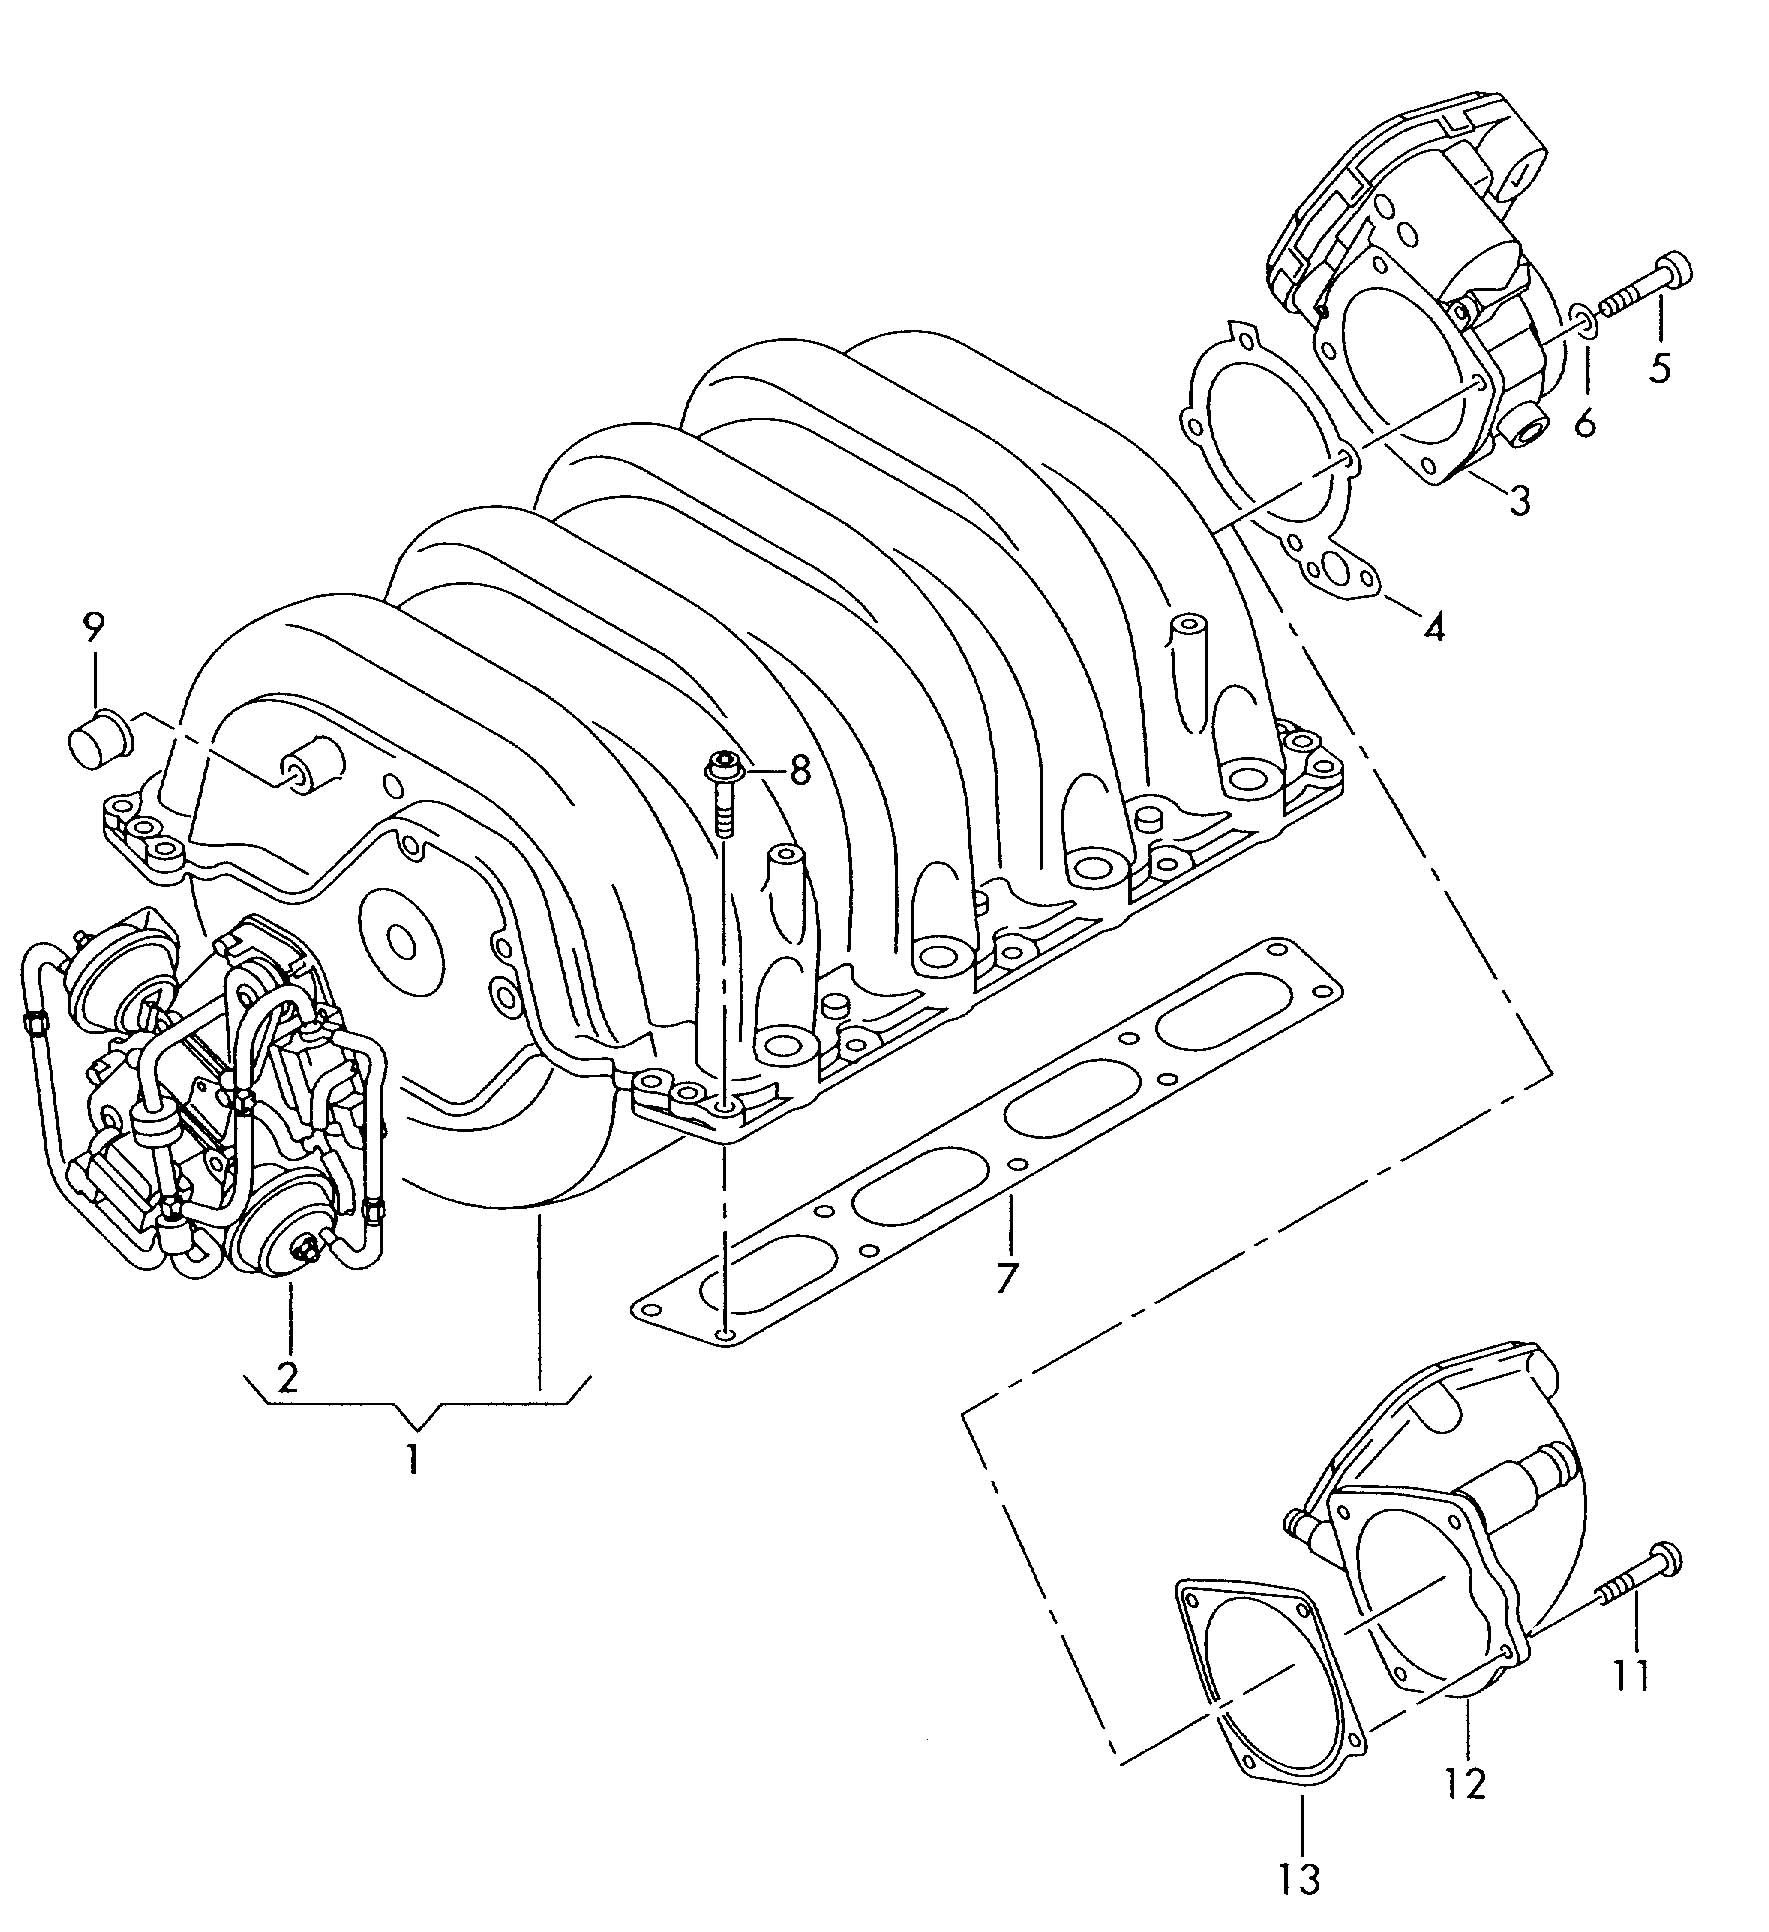 Audi A8 Engine Diagram